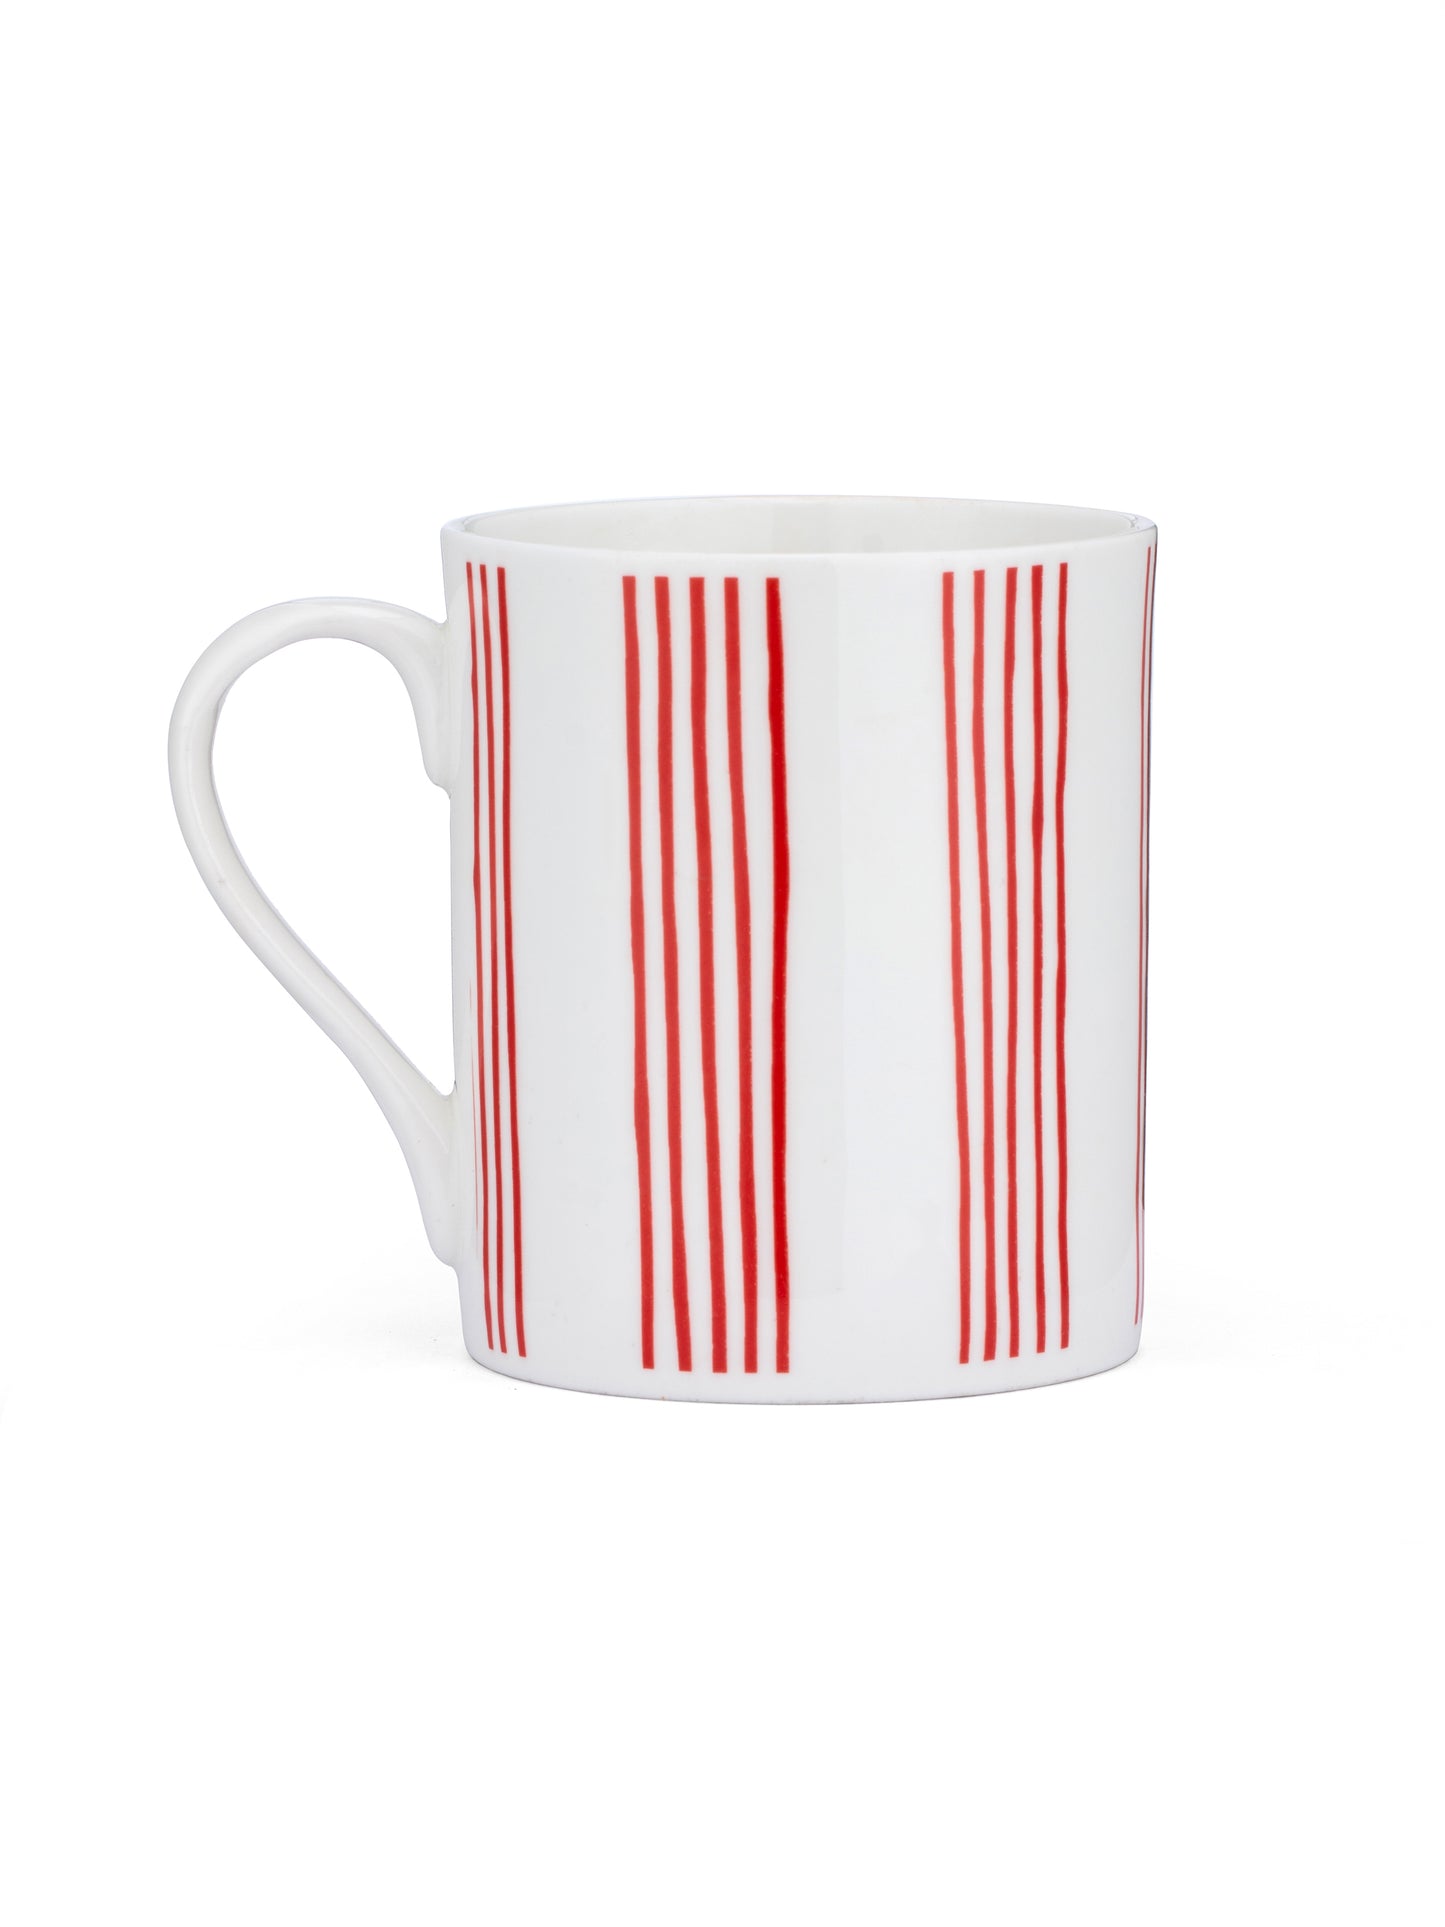 Swing Coffee & Milk Mug, 350ml, 1 Piece (Stripes)